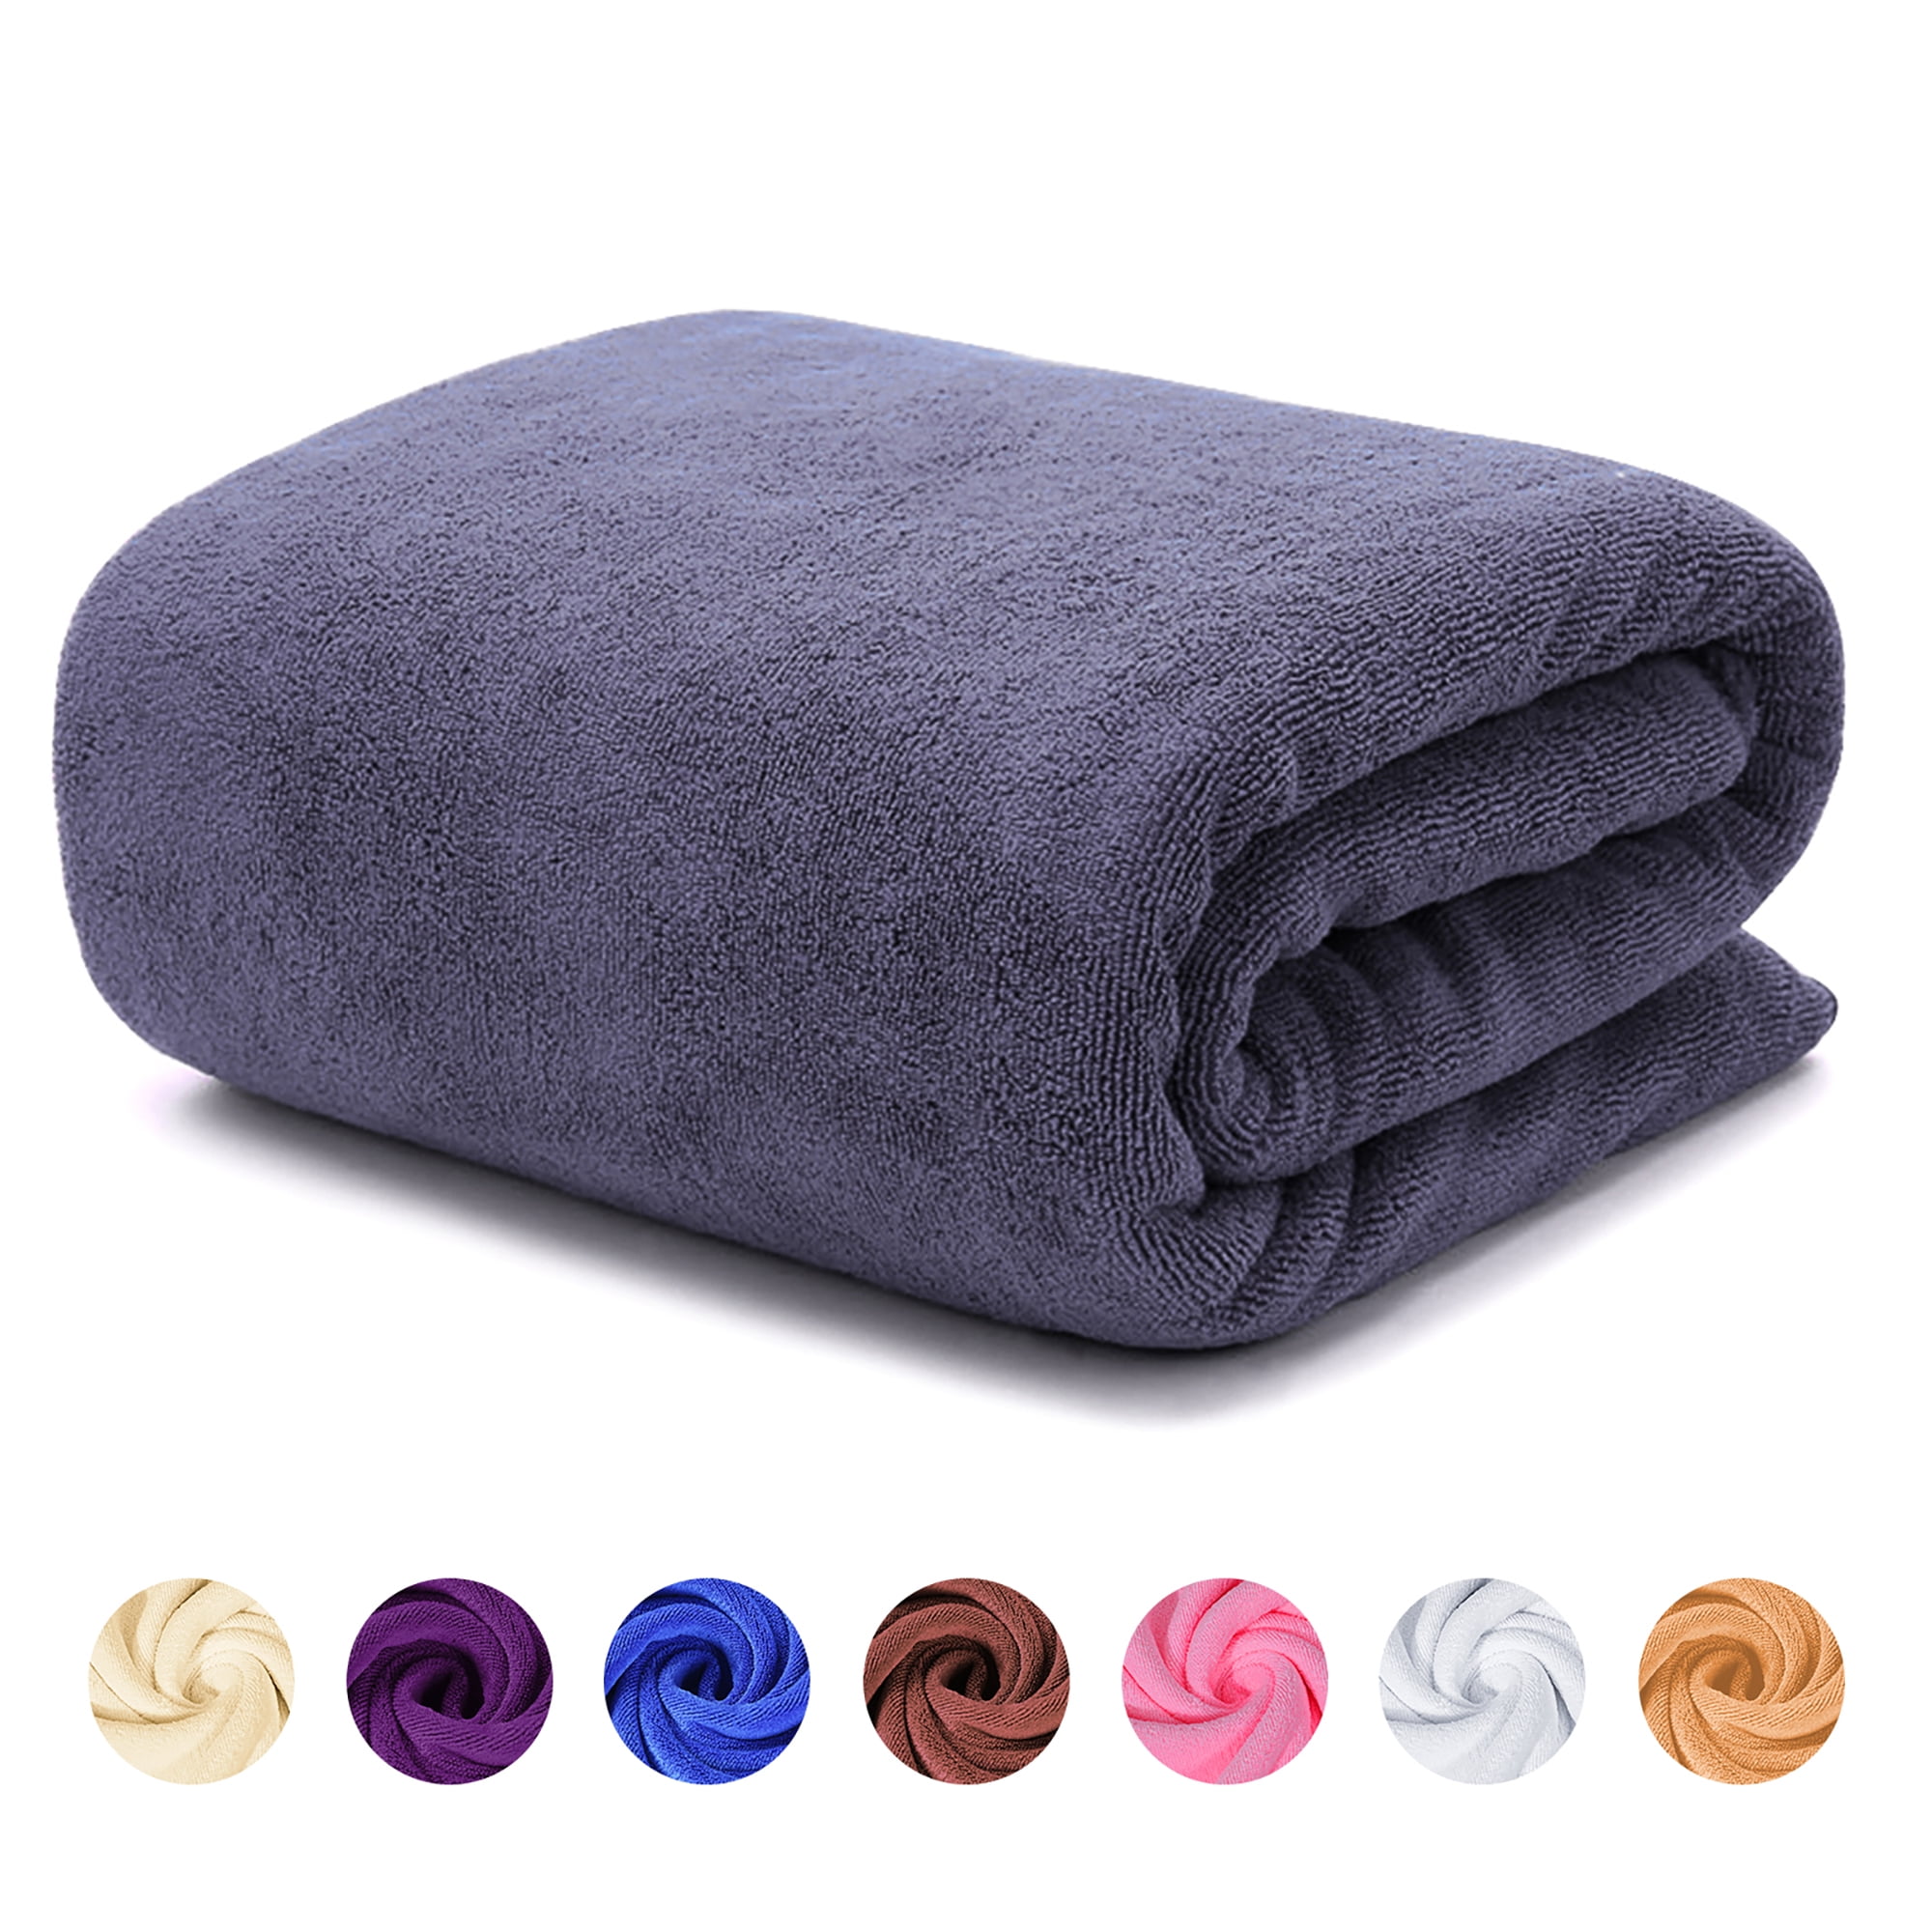 Wefive Microfiber Luxury Bath Towels Sheets Extra Large Purple Bath Sheet  Super Soft Fast Drying Beach Towels Swimming Bathroom Towel (32 Inch X 60